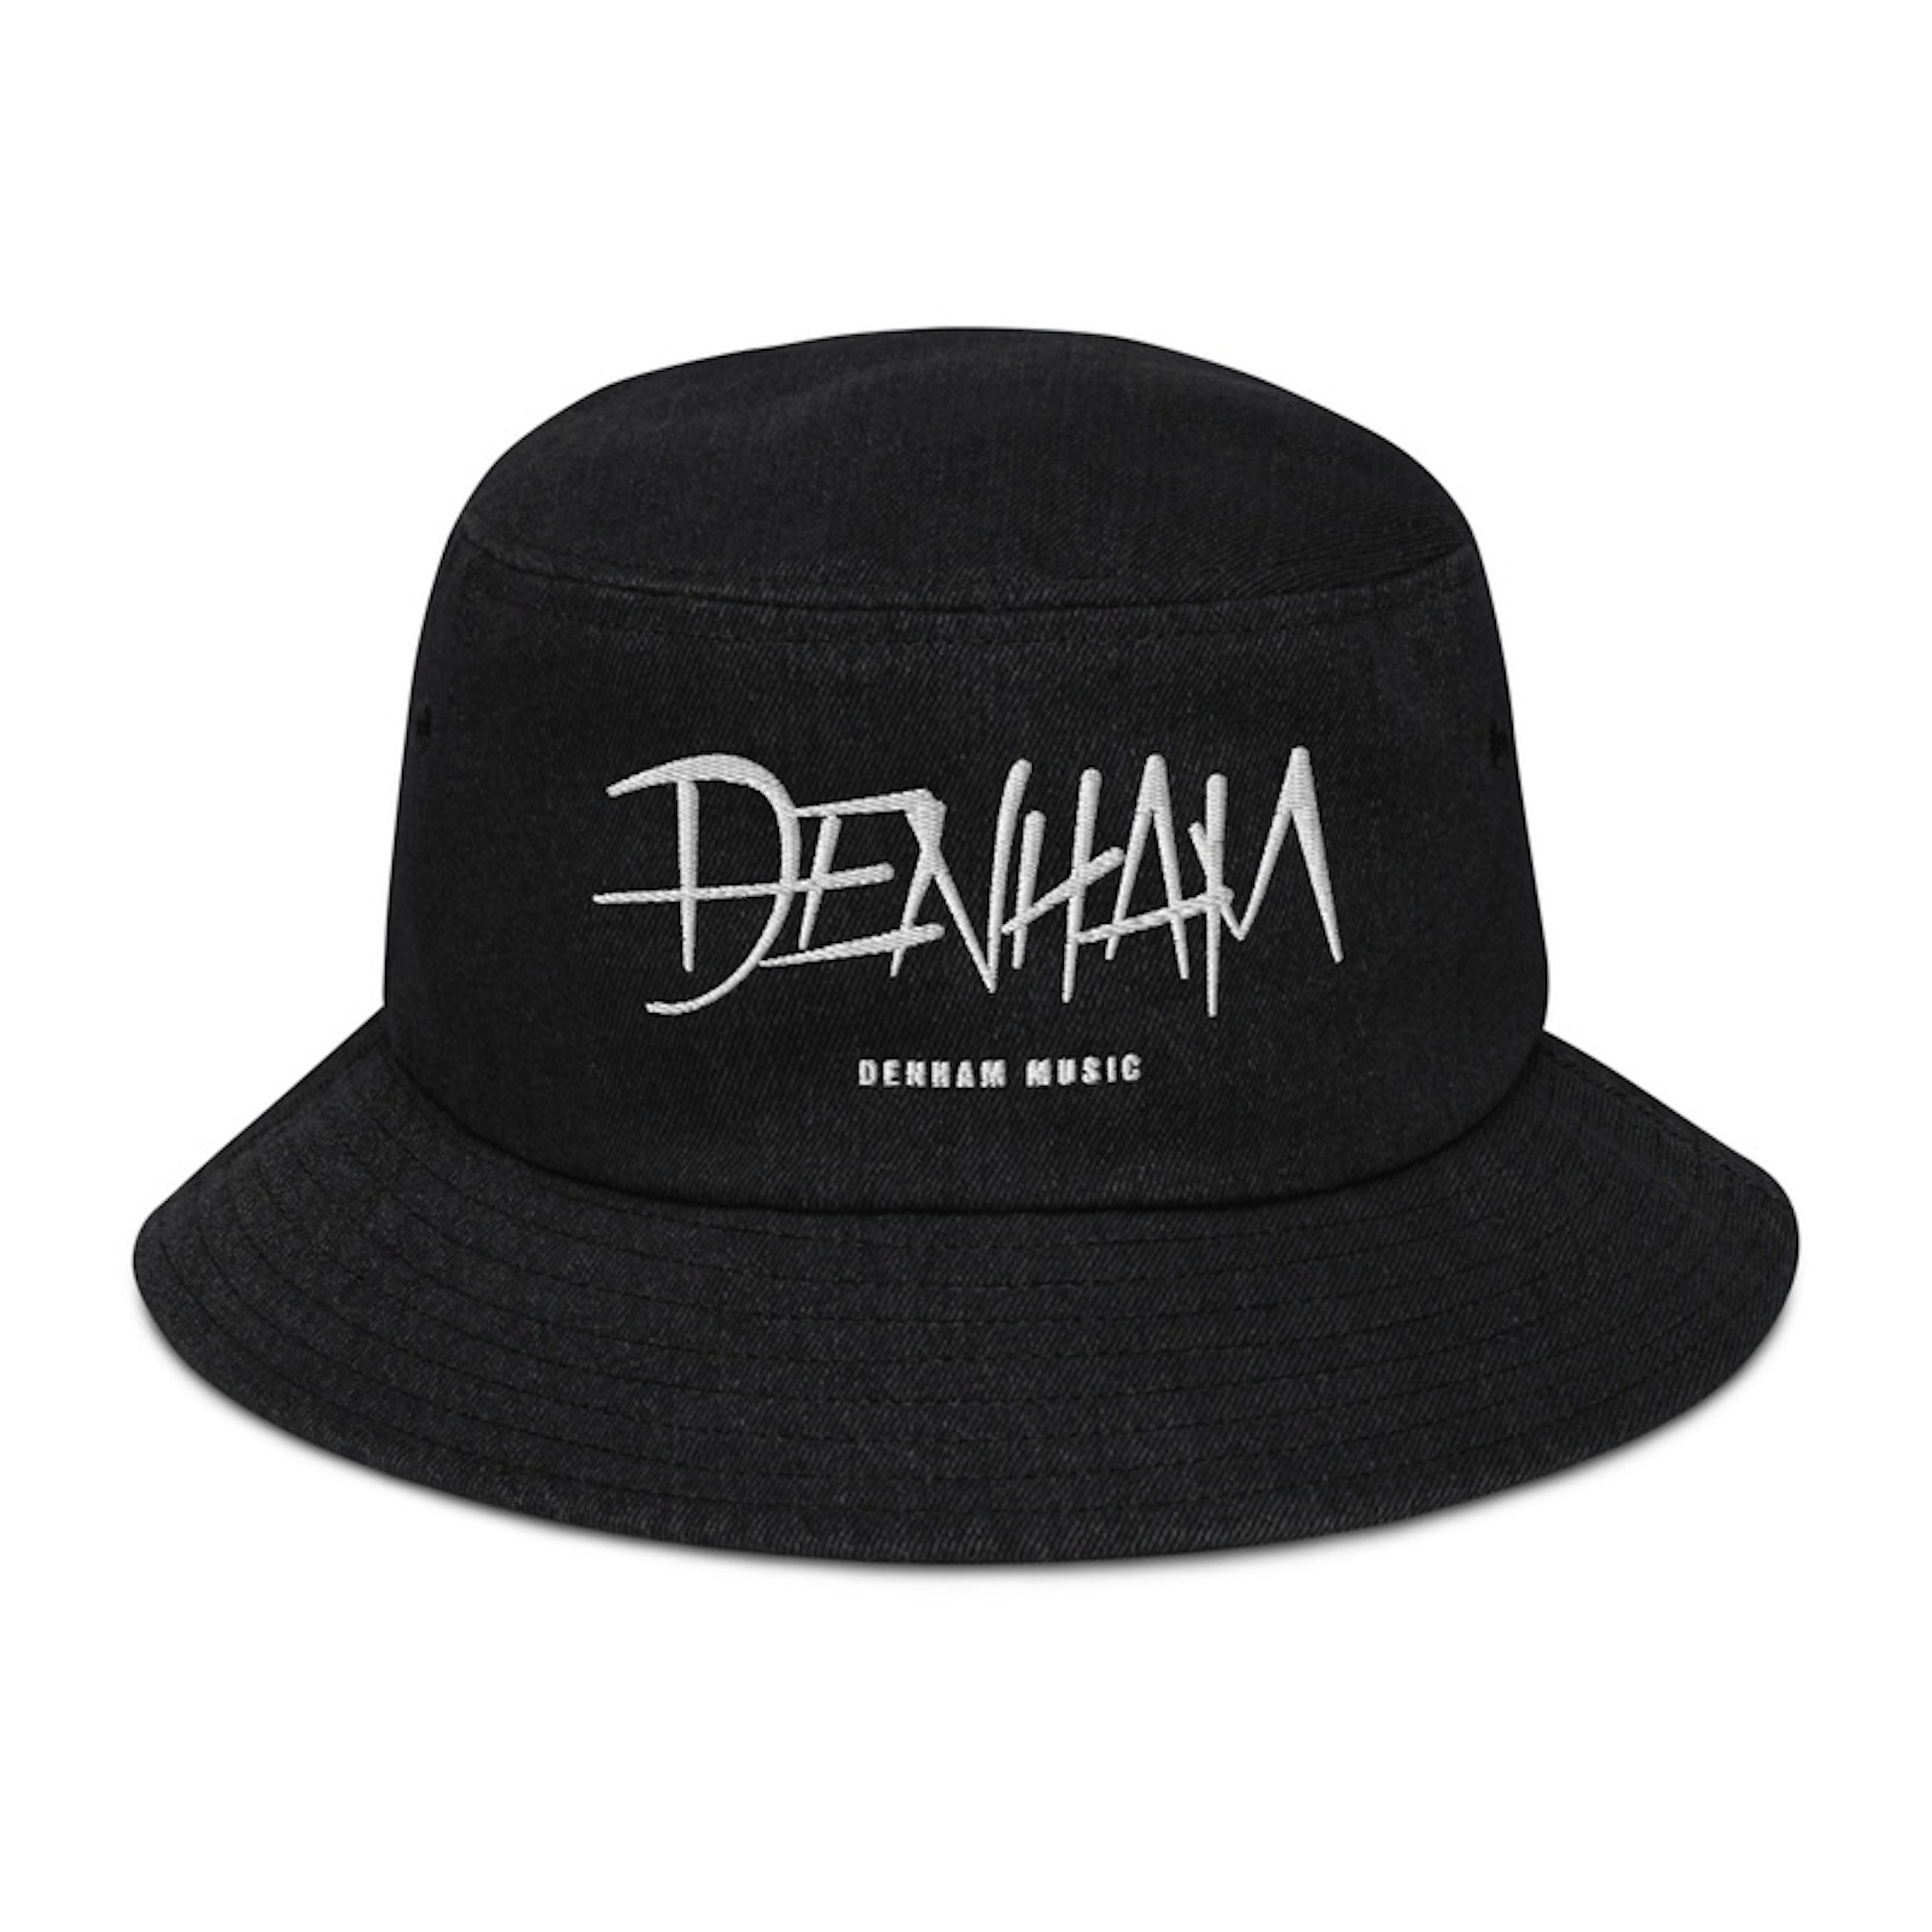 Denham Denim Bucket Hat